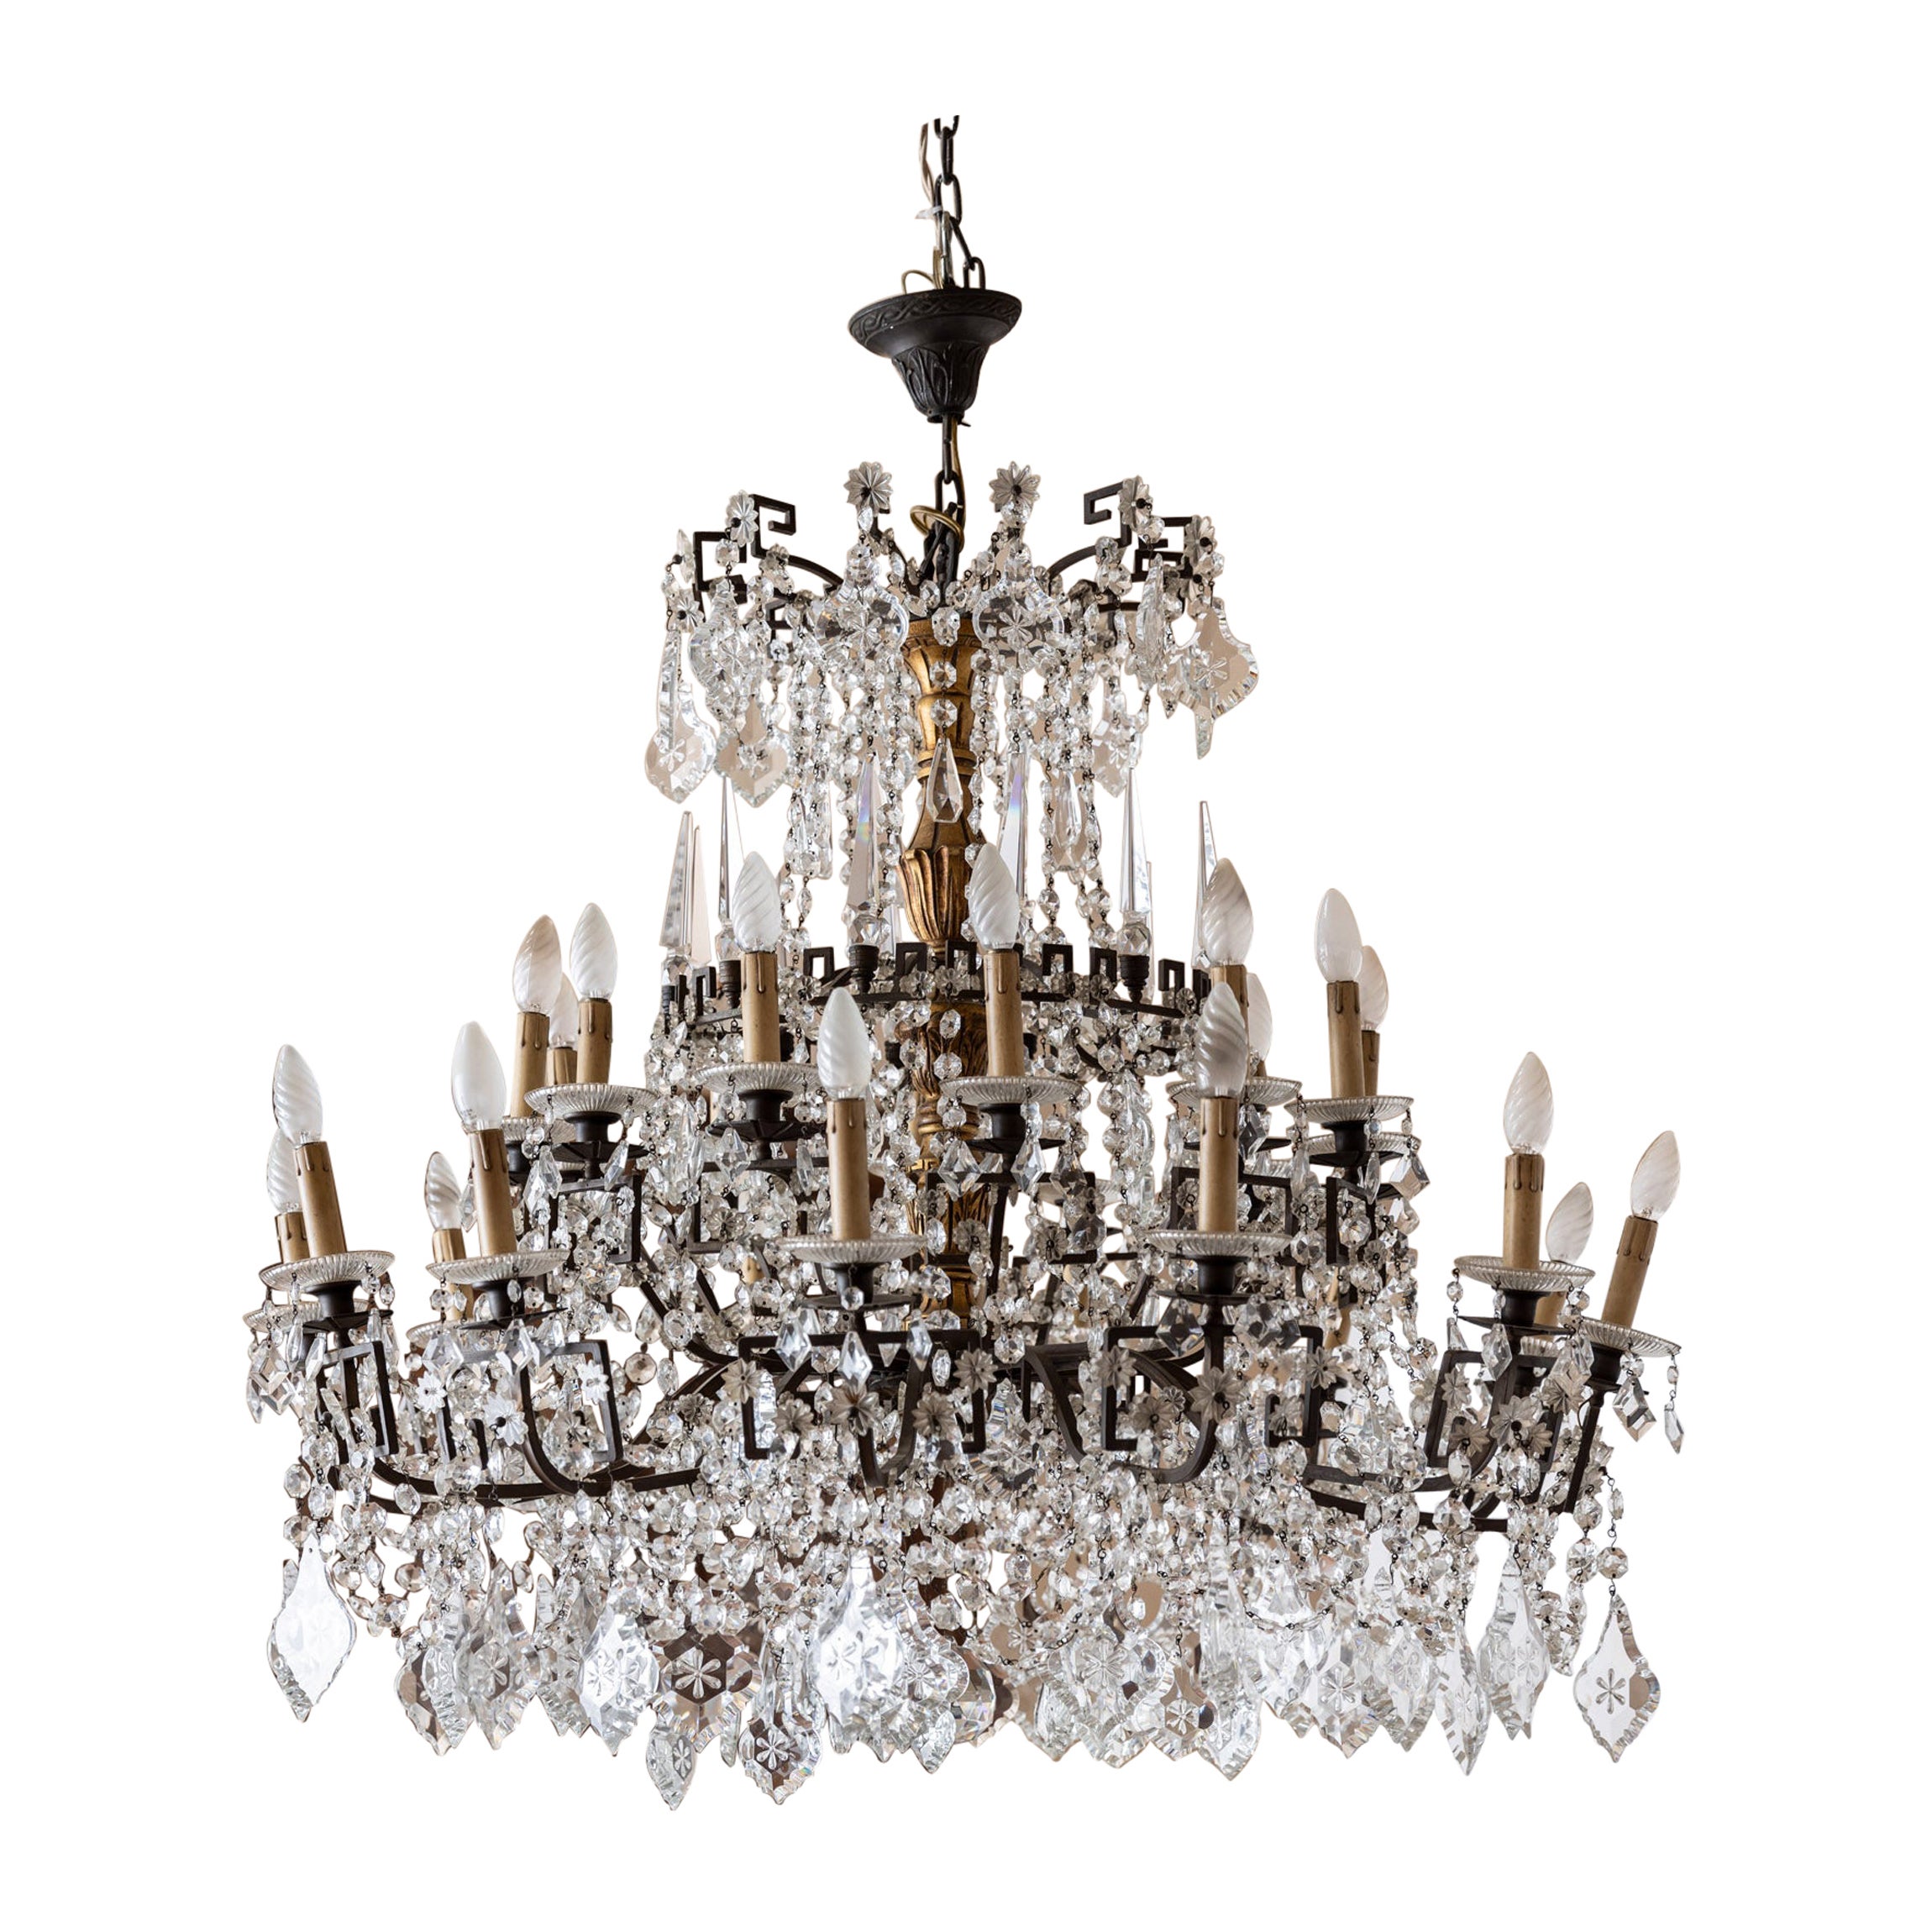 Midcentury italian glass drops chandelier For Sale